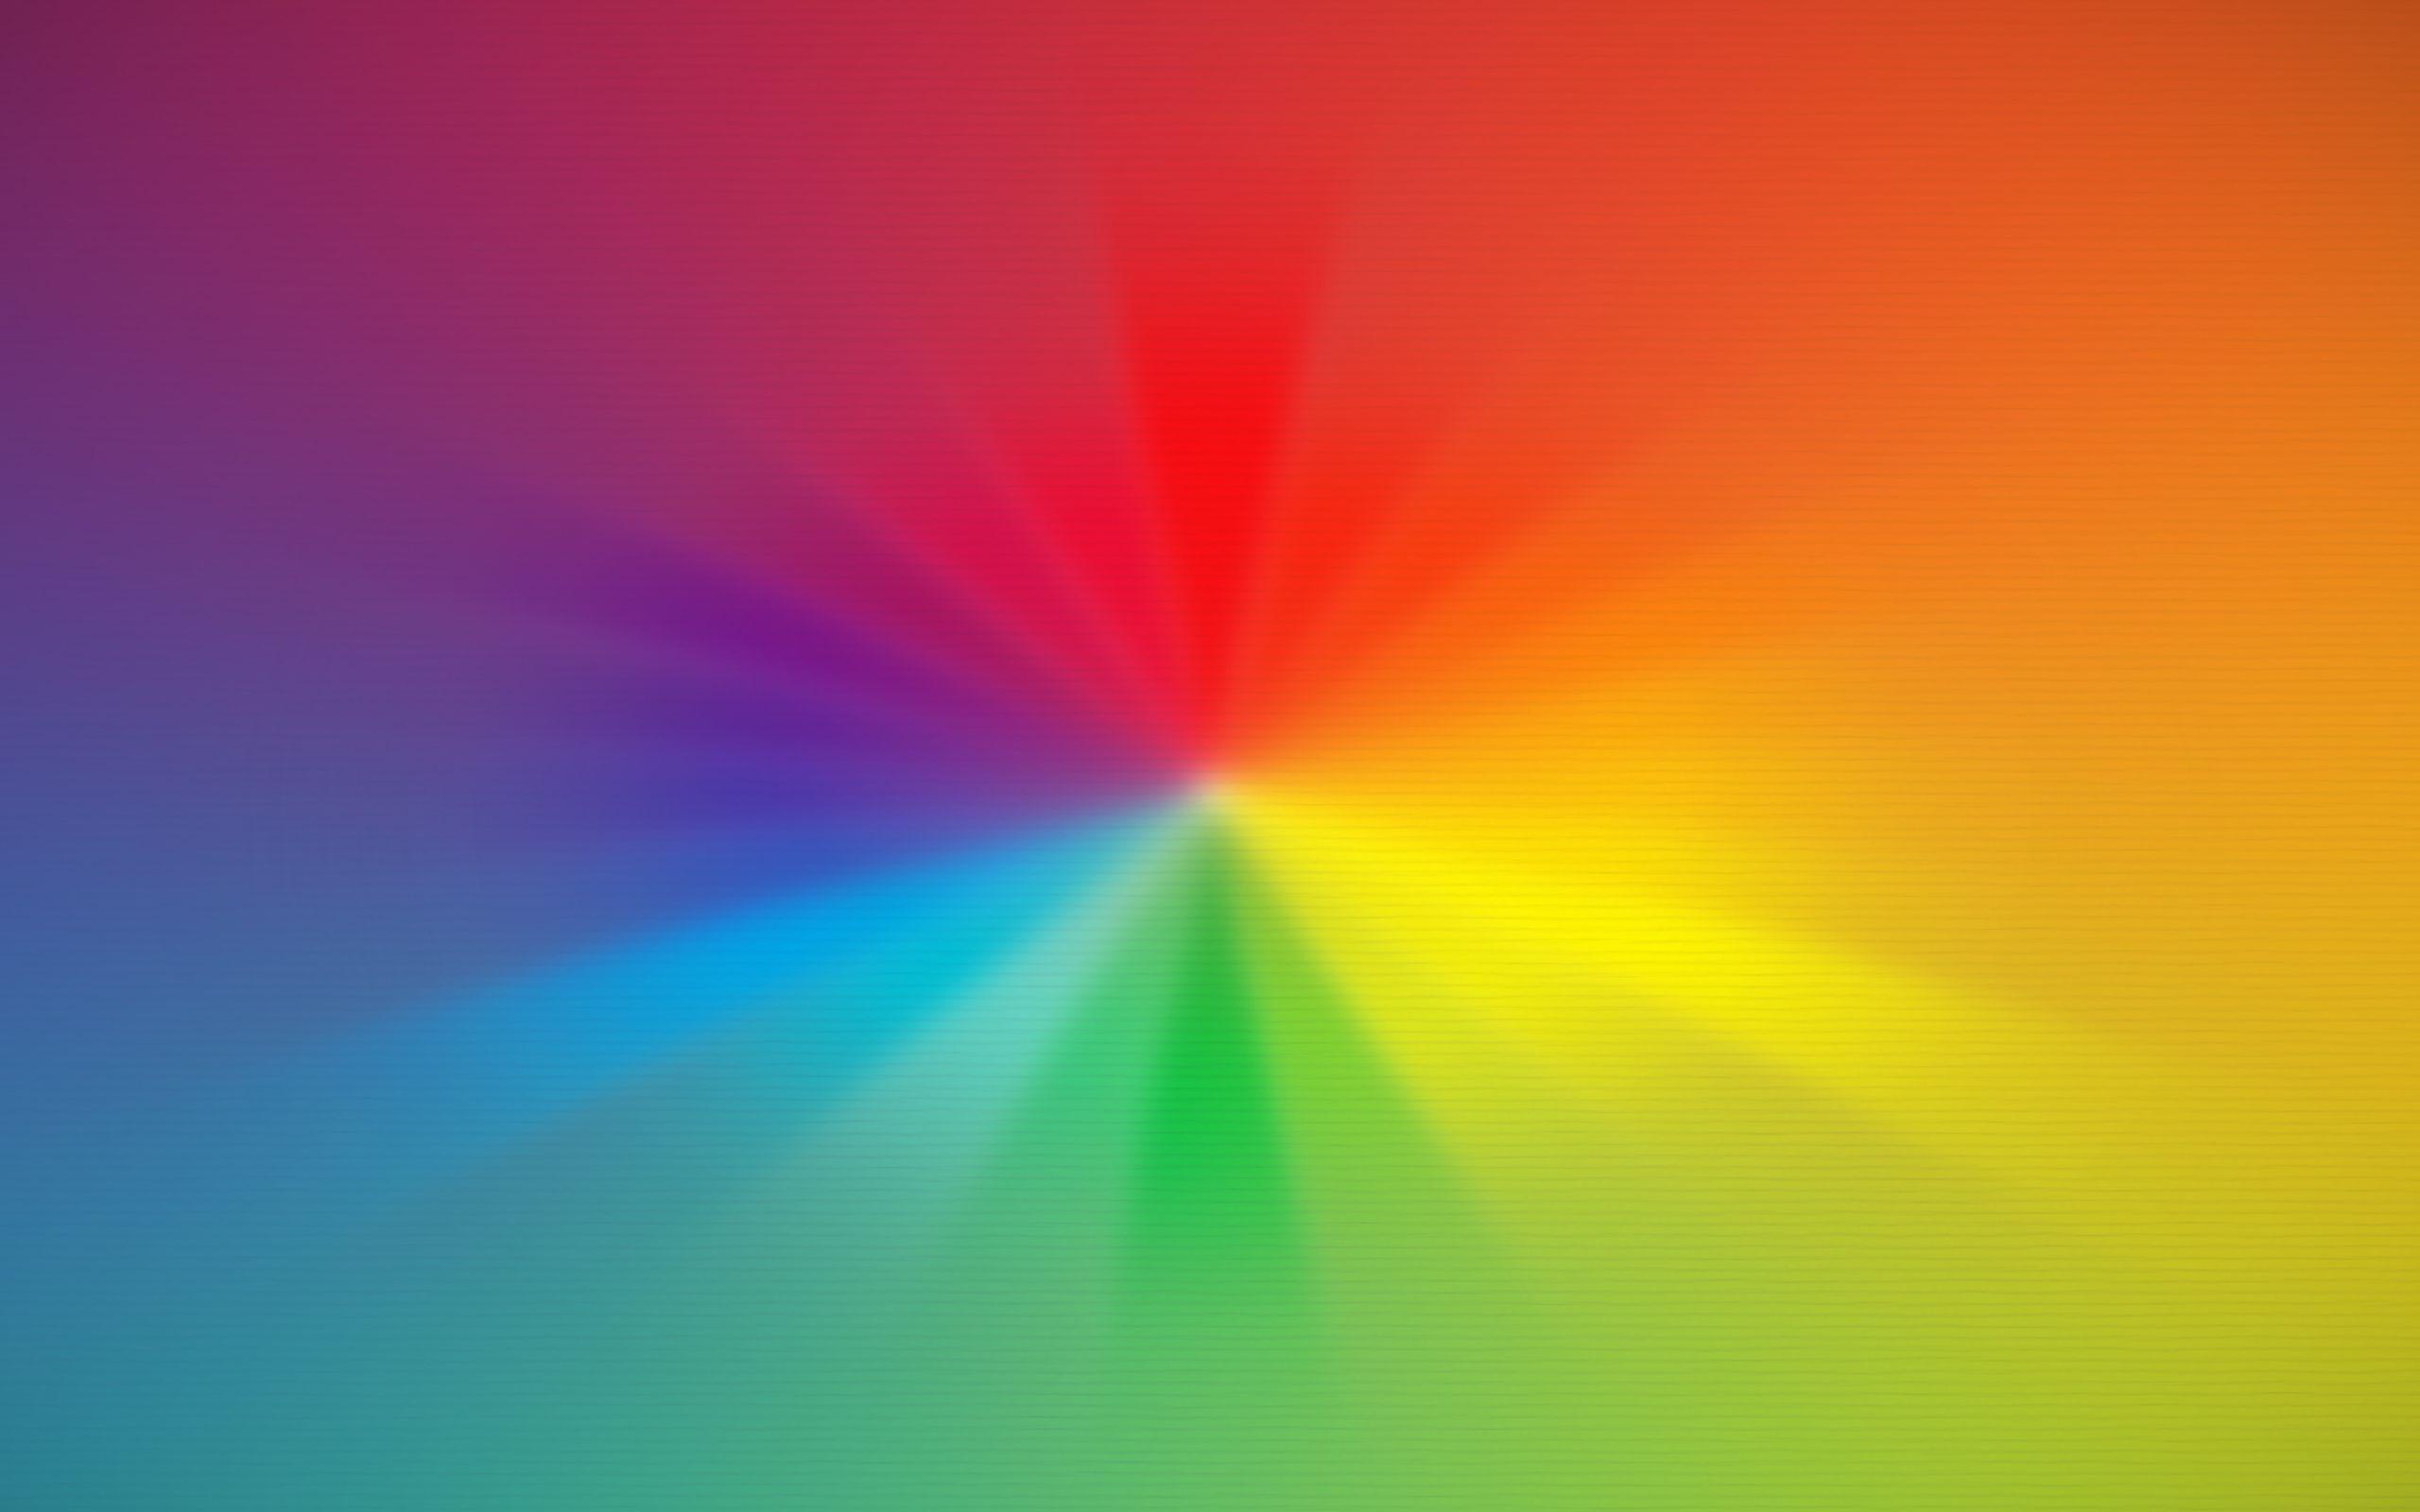 I'm down with RGB! (Roy G. Biv). Rainbow